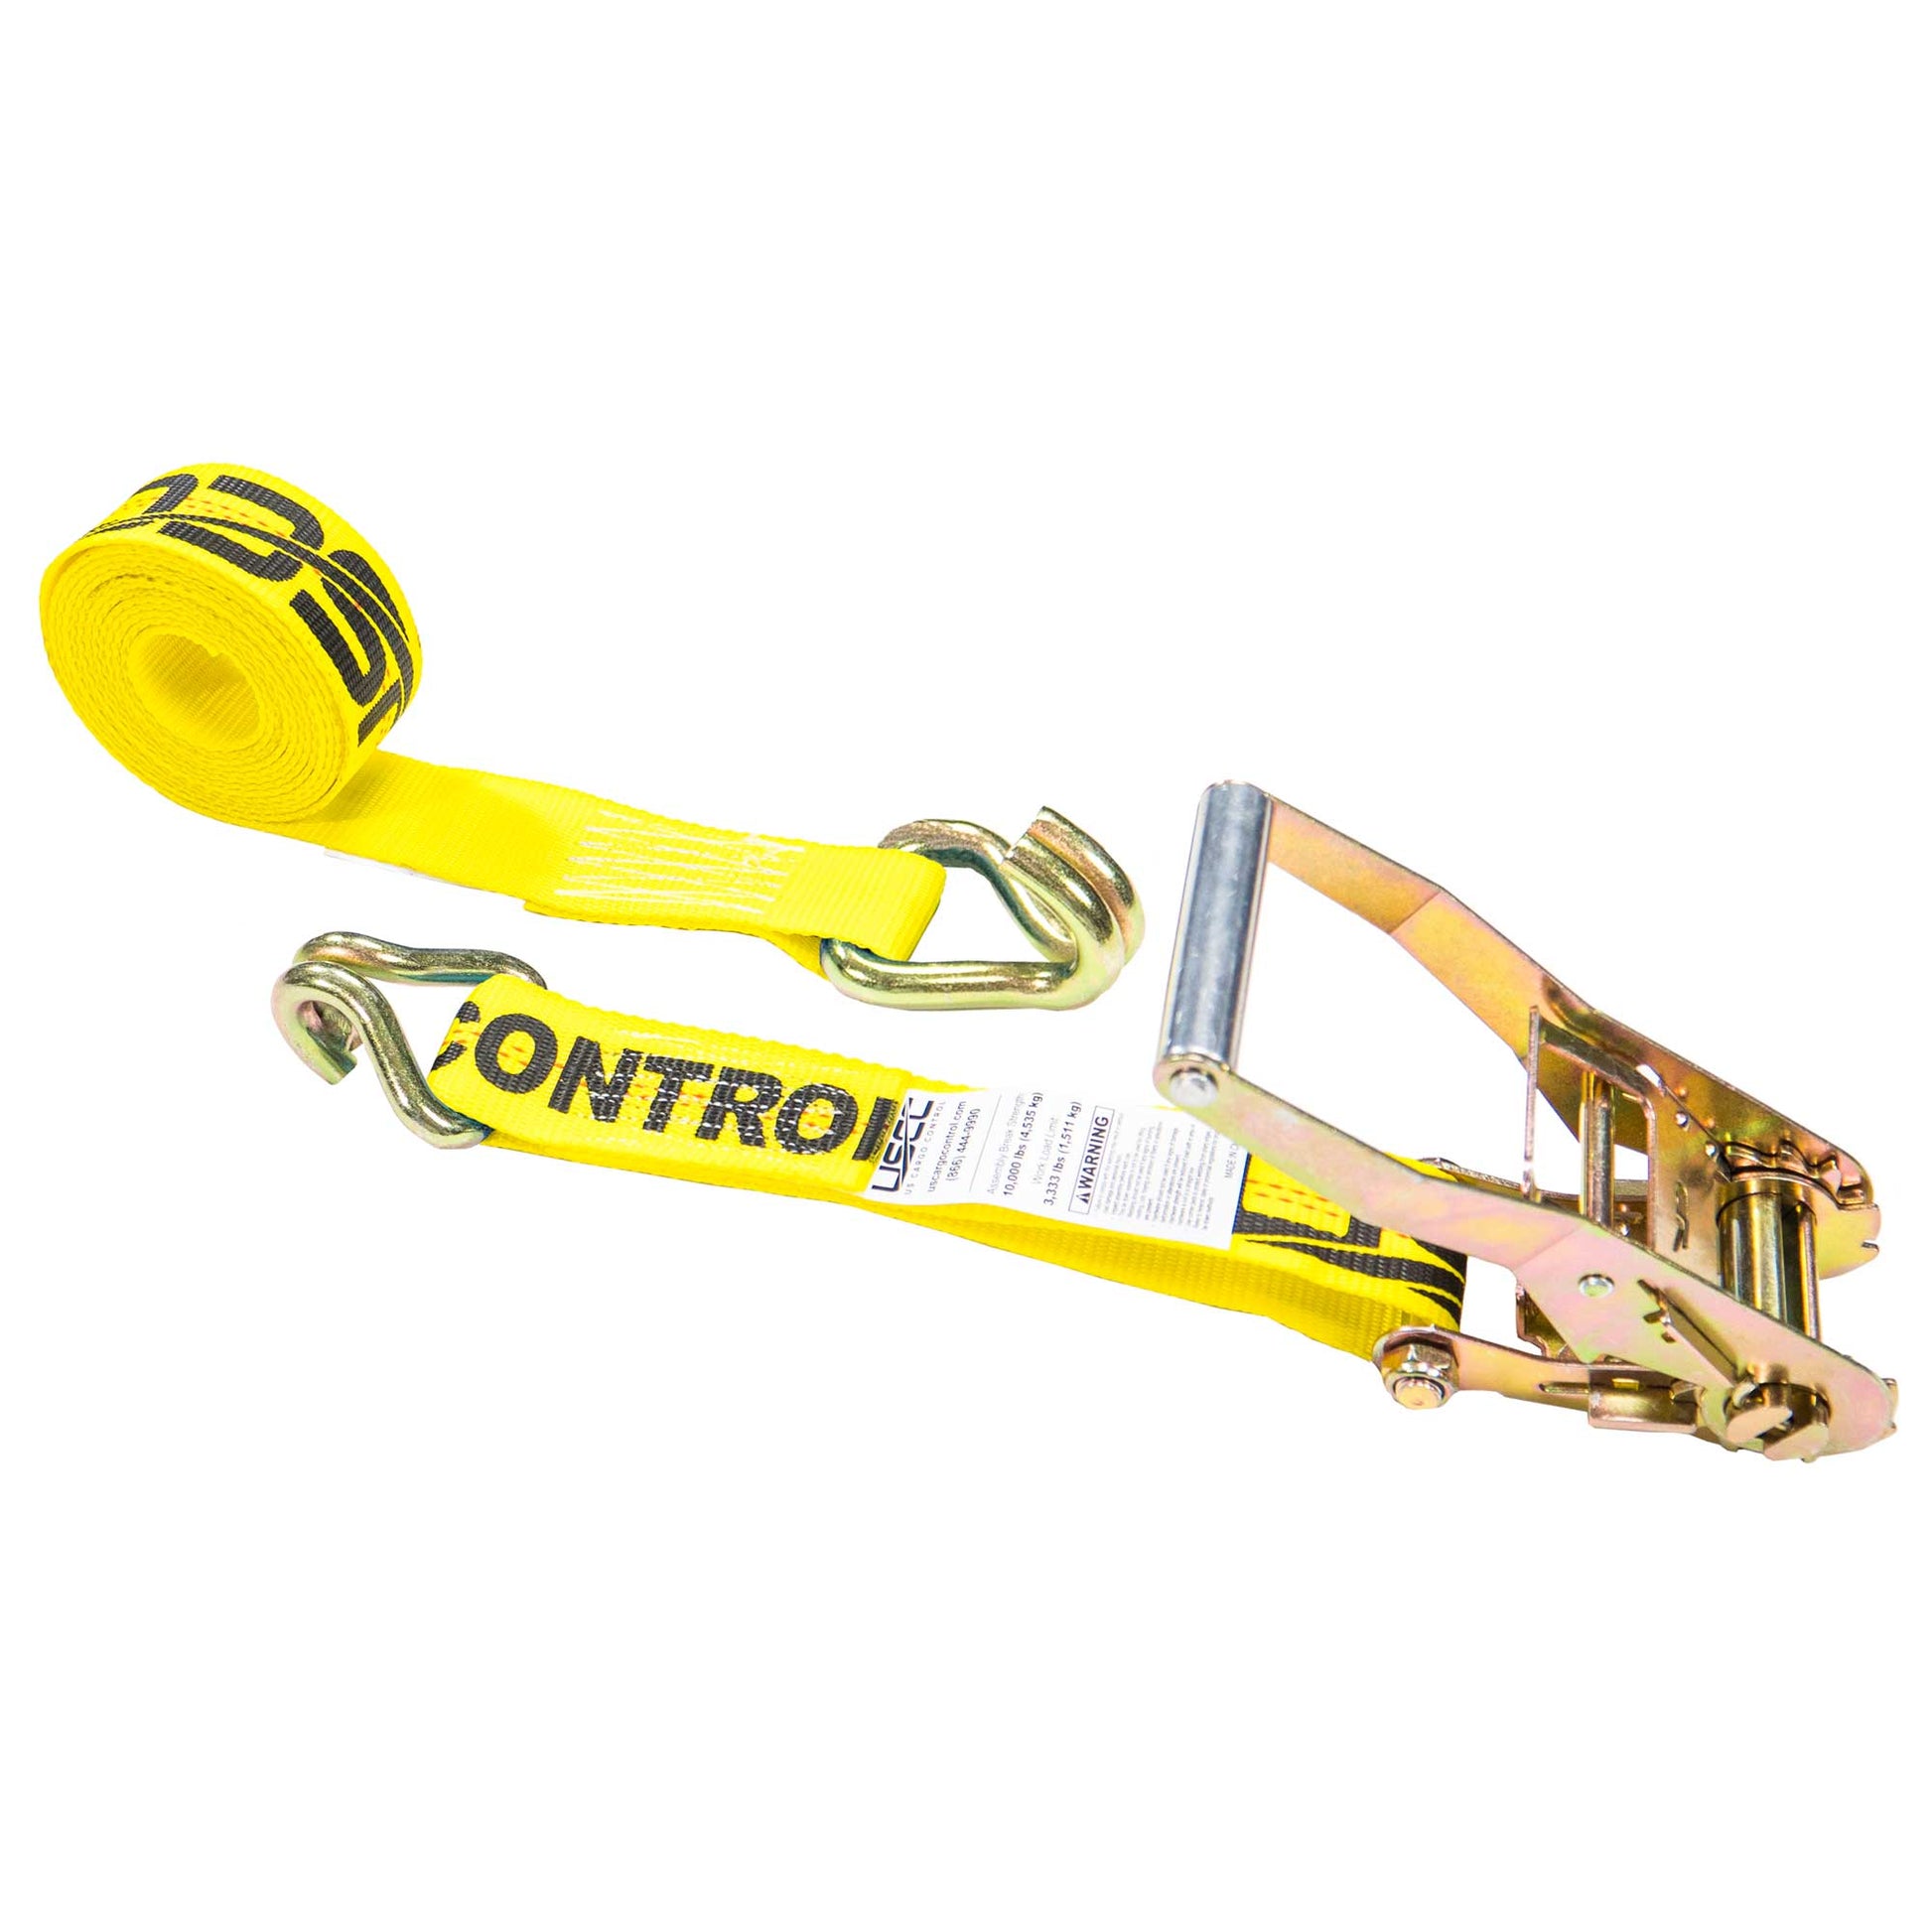 50' ratchet strap -  2" yellow wire hook ratchet strap